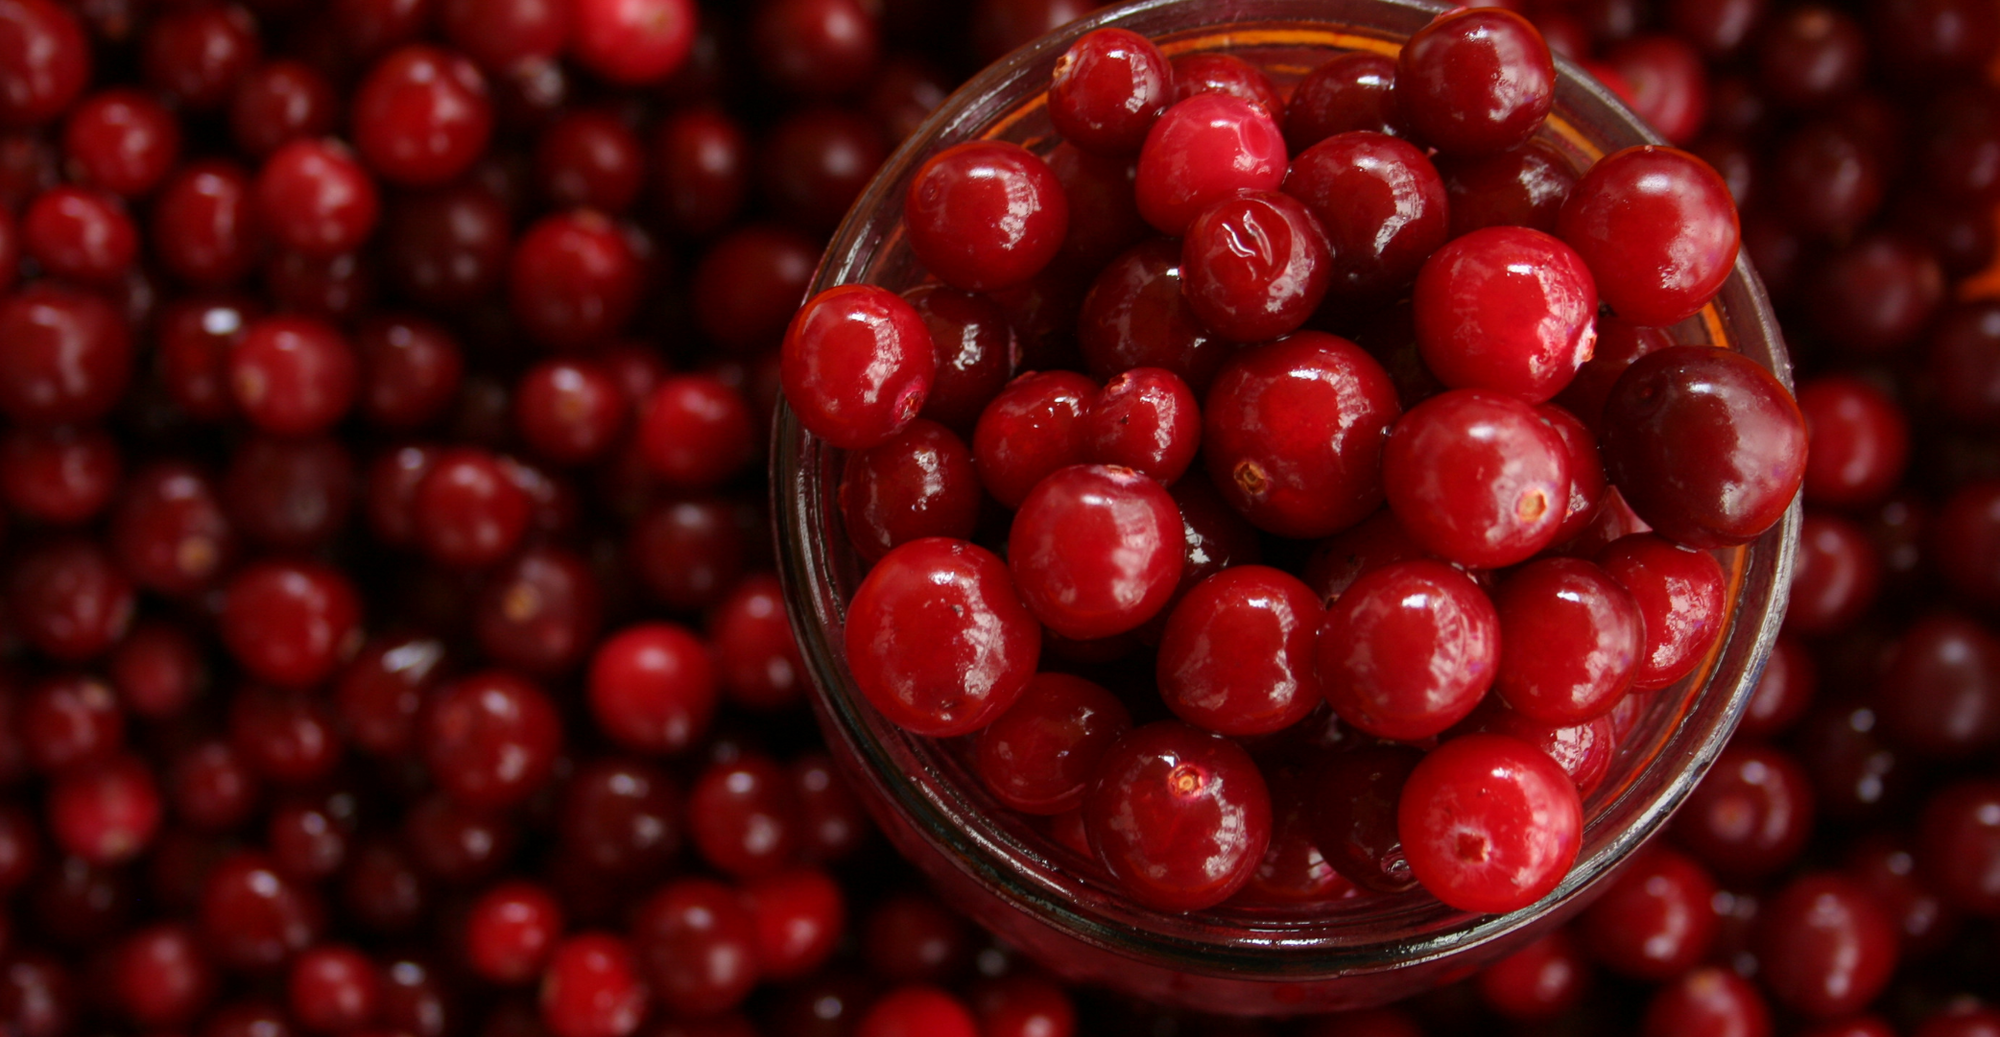 El Cranberry, la súper fruta aliada de tu salud